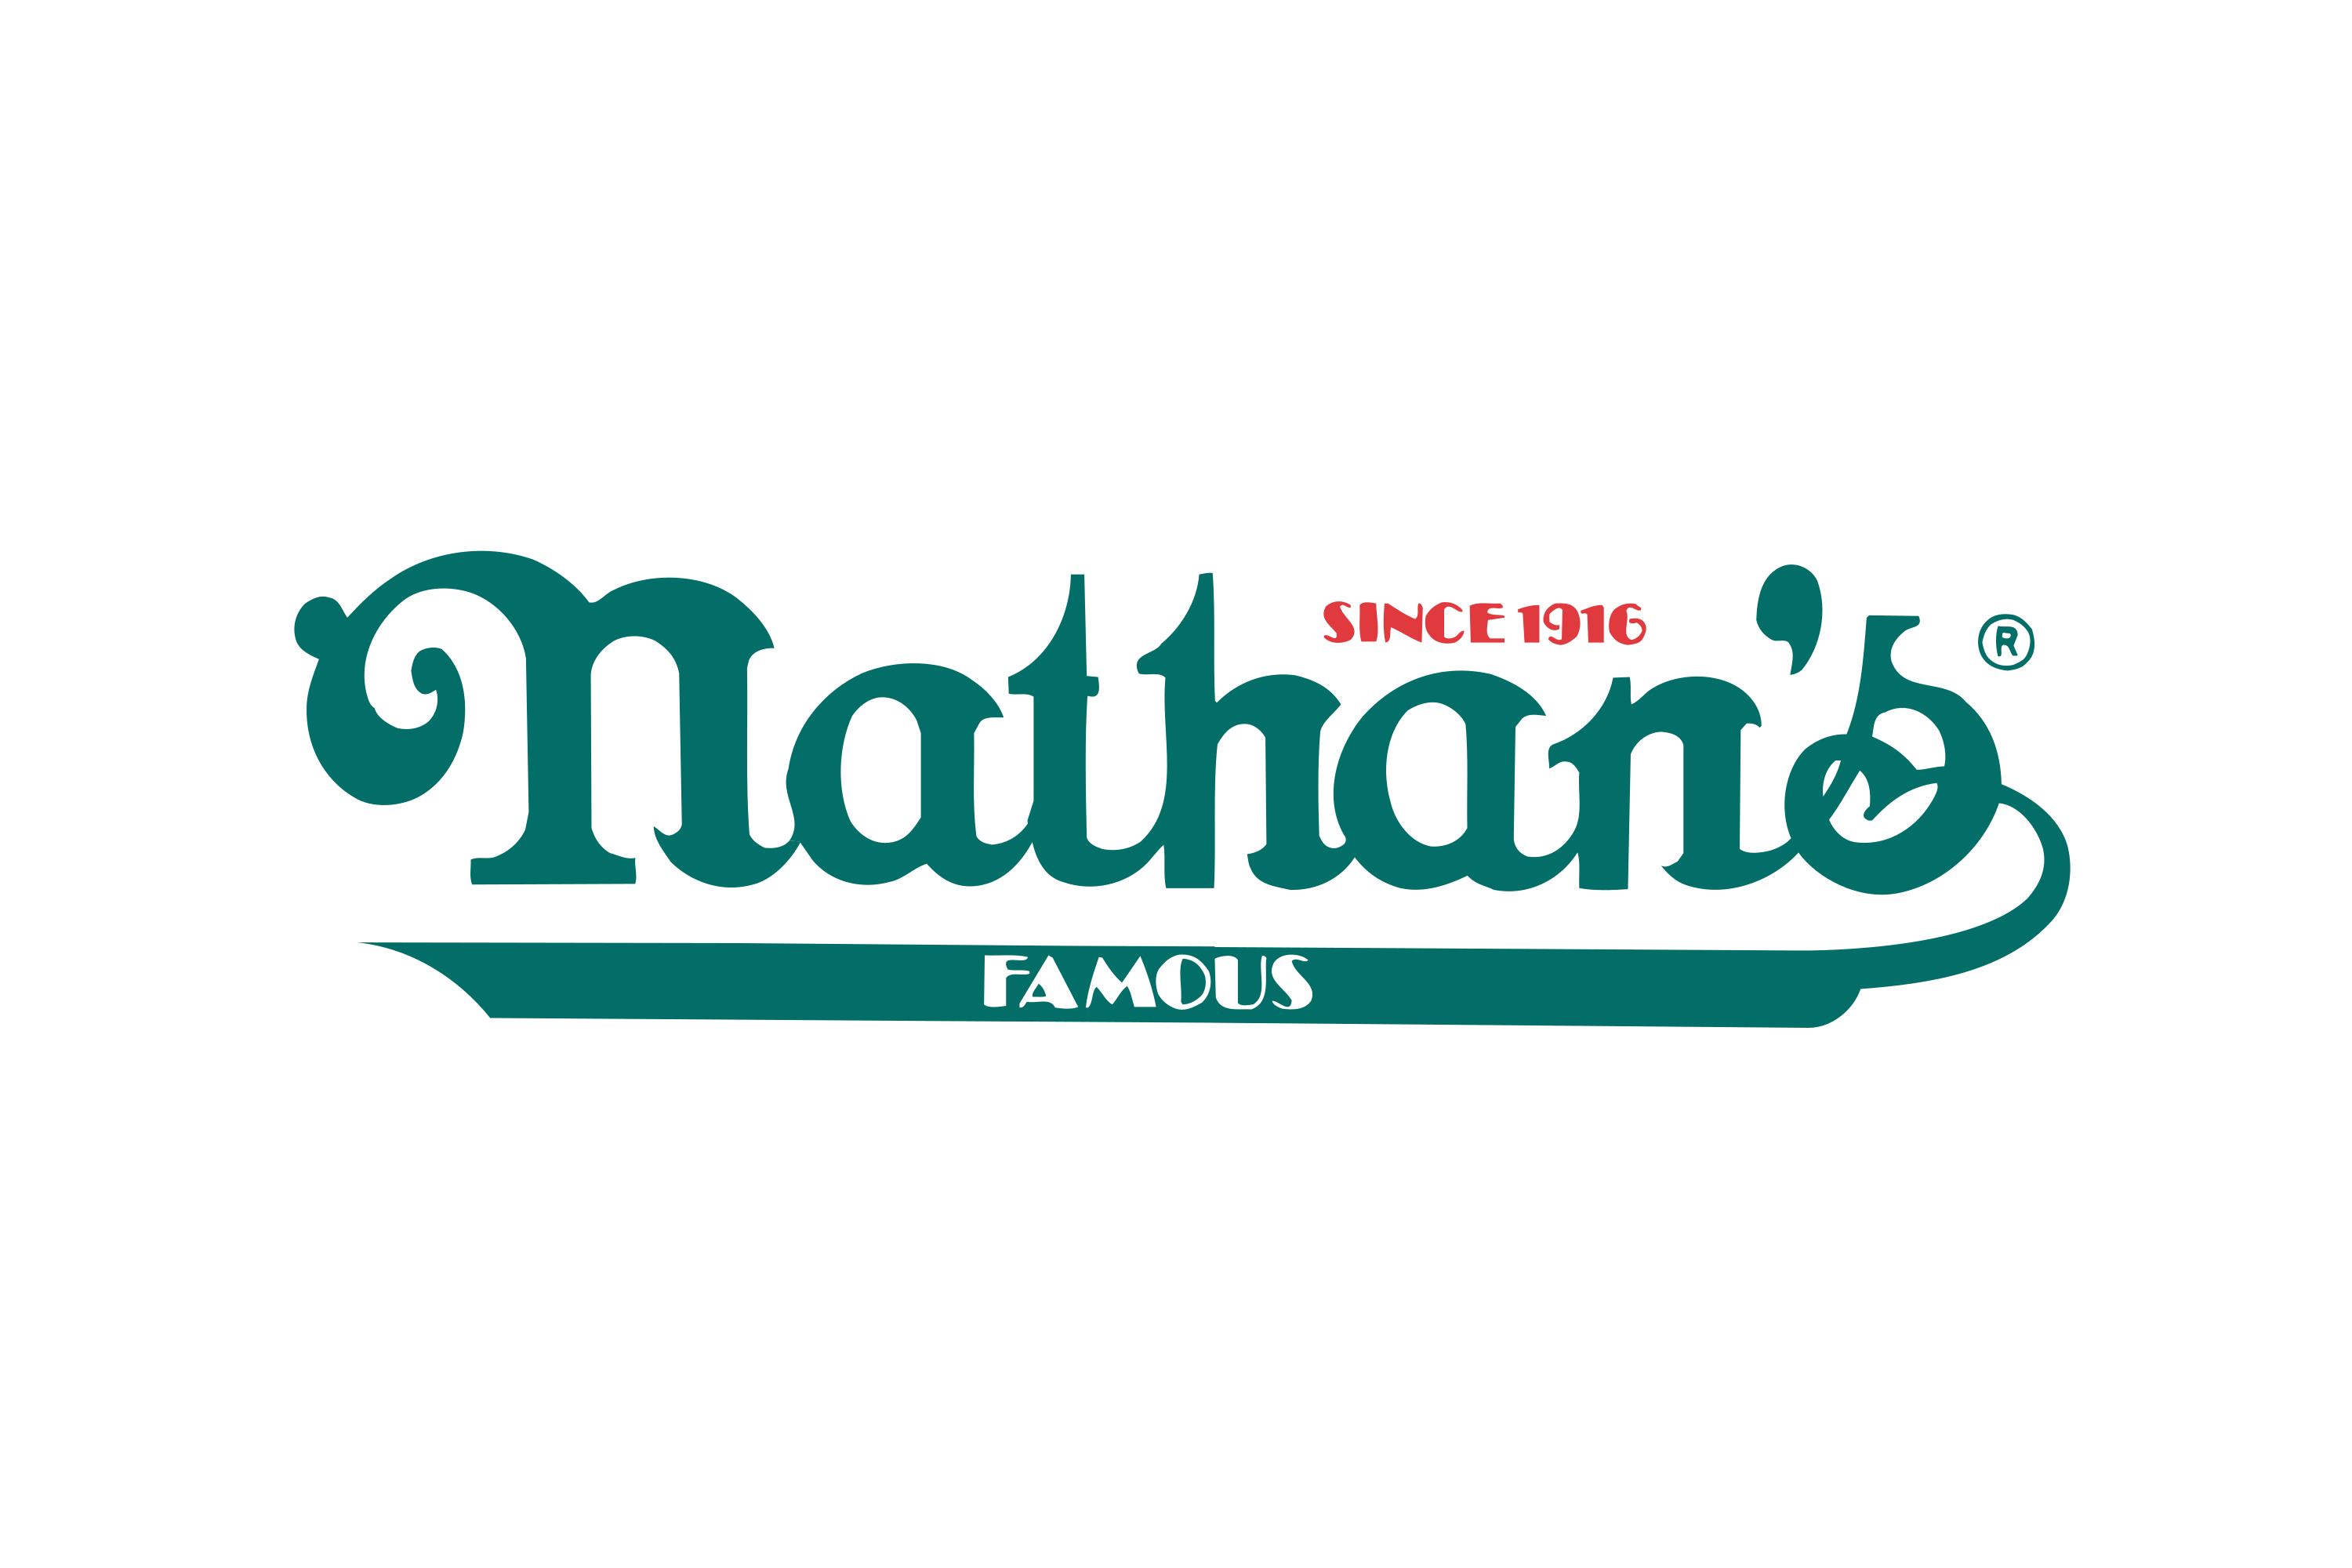 Nathan’s Famous Logo